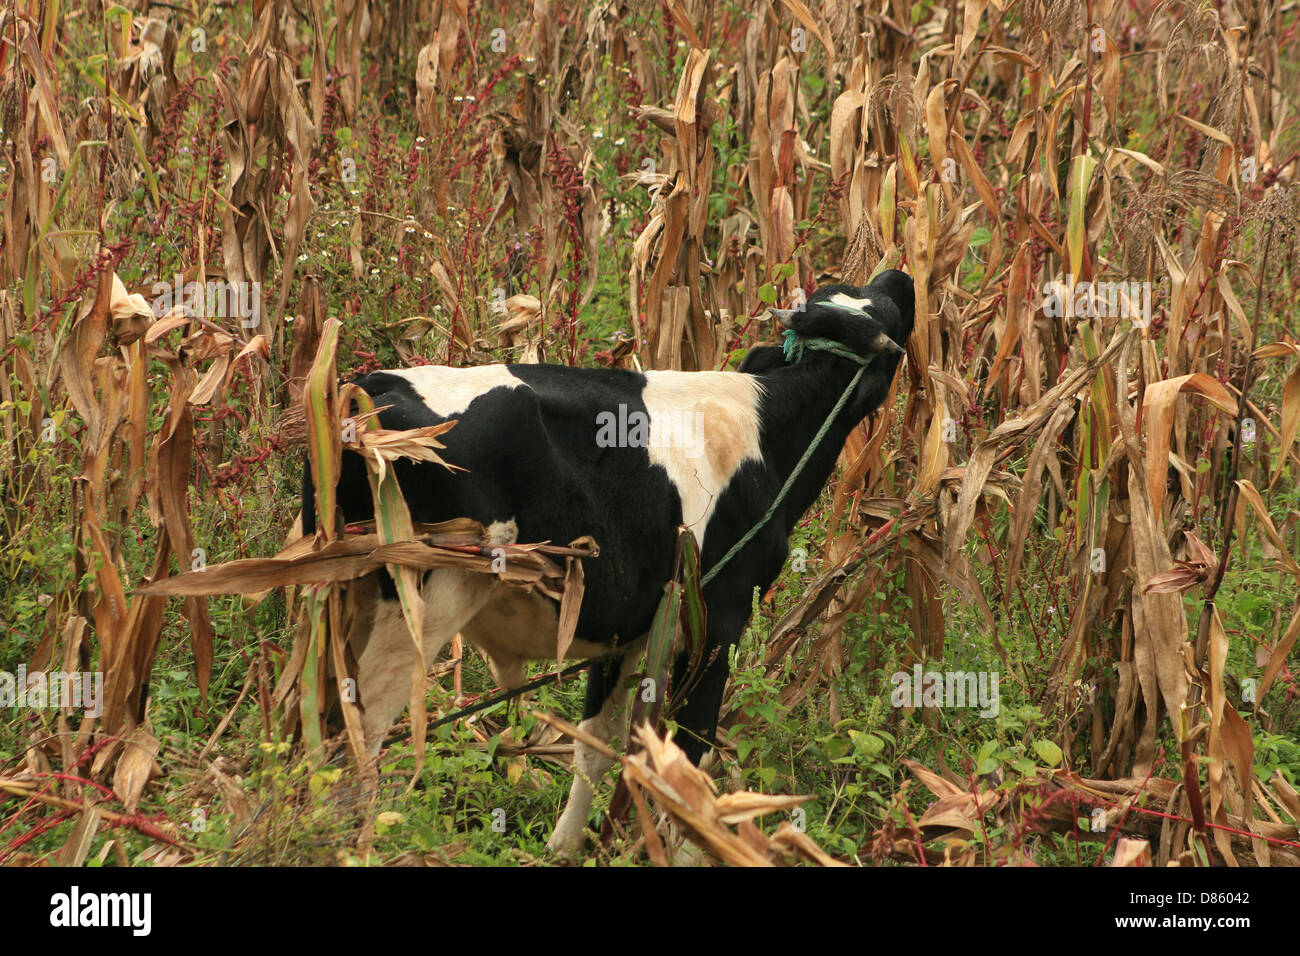 A Holstein Bull eating stalks of corn in a farmers field in Cotacachi, Ecuador Stock Photo